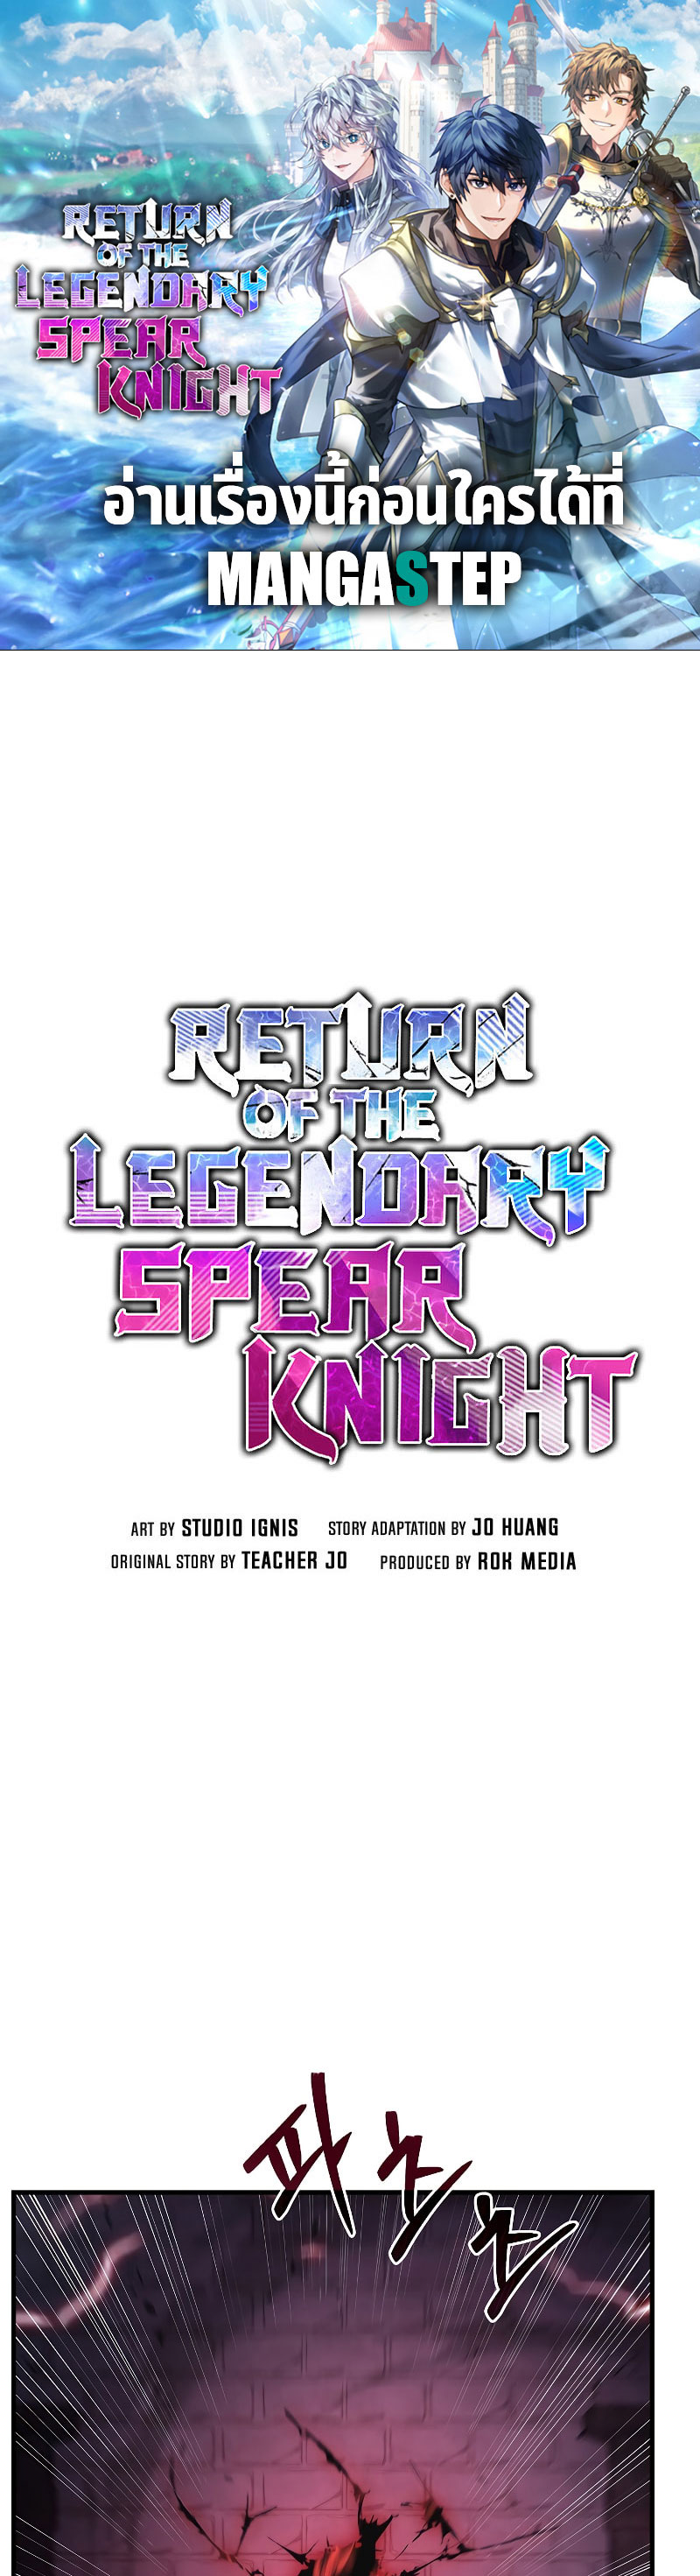 Spear Knight 109 (1)